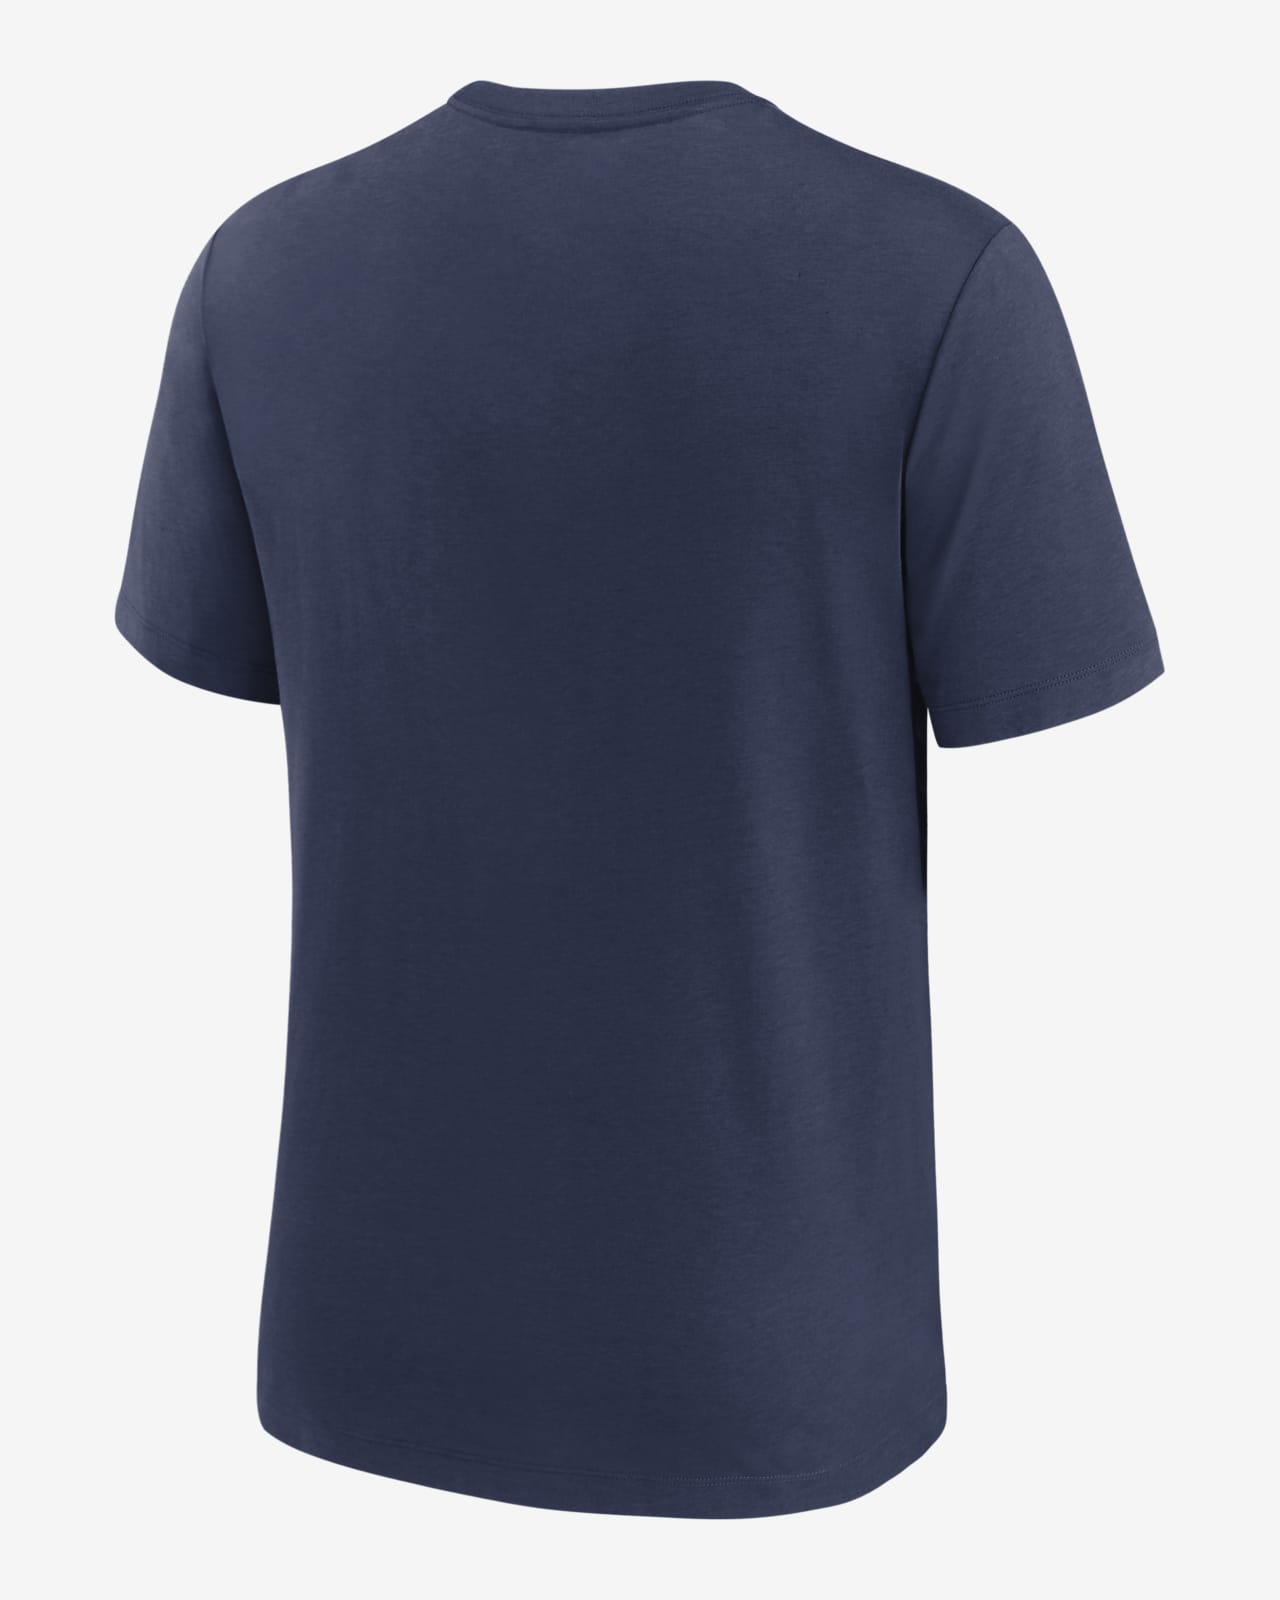 Nike Dri-FIT Game (MLB Boston Red Sox) Men's Long-Sleeve T-Shirt.